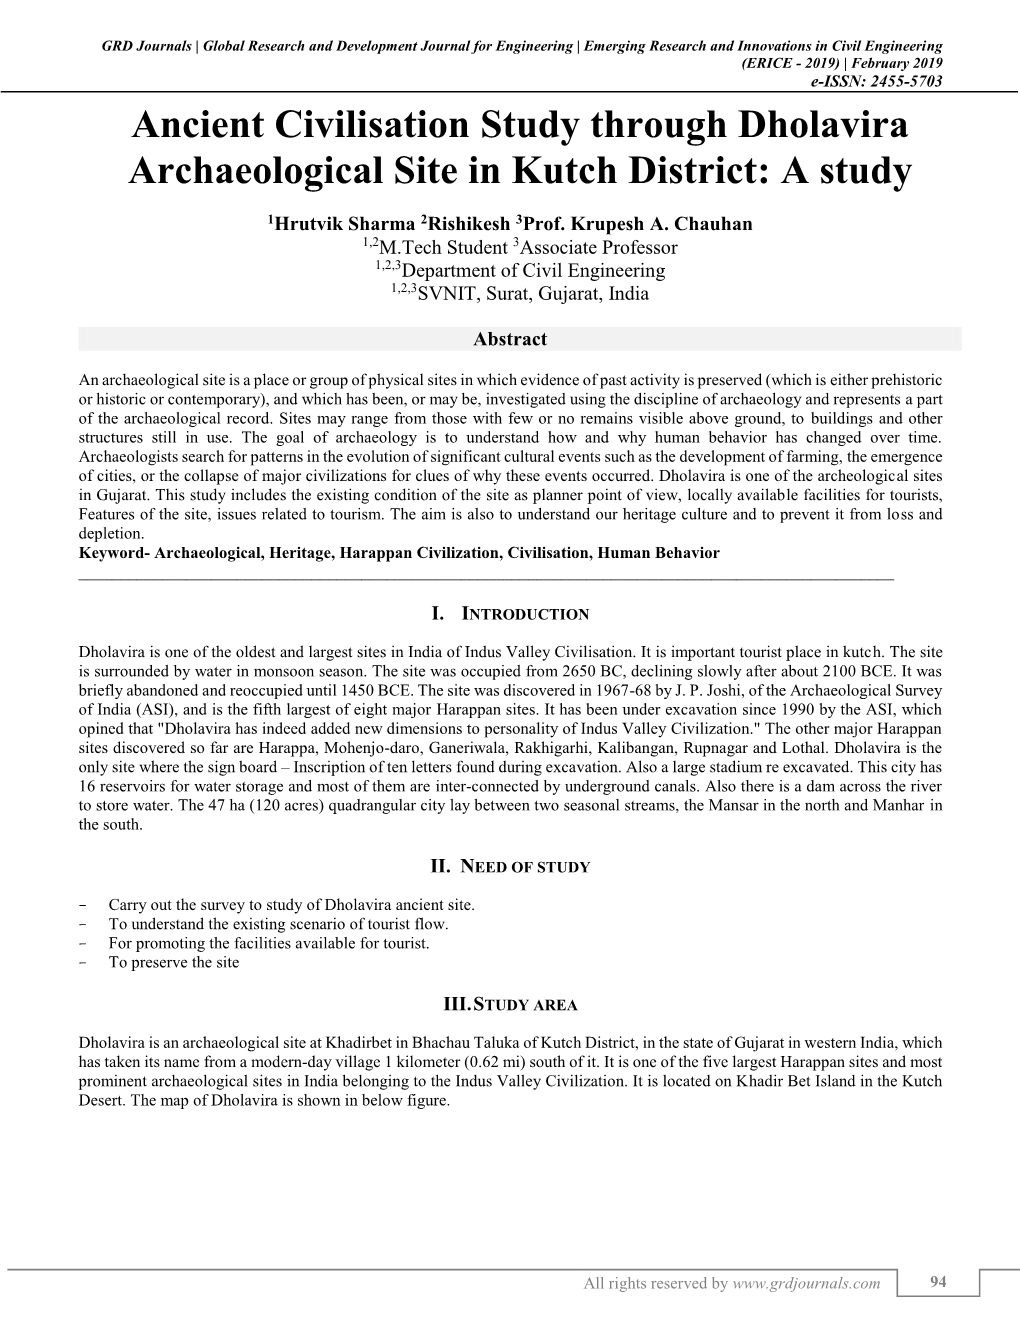 Ancient Civilisation Study Through Dholavira